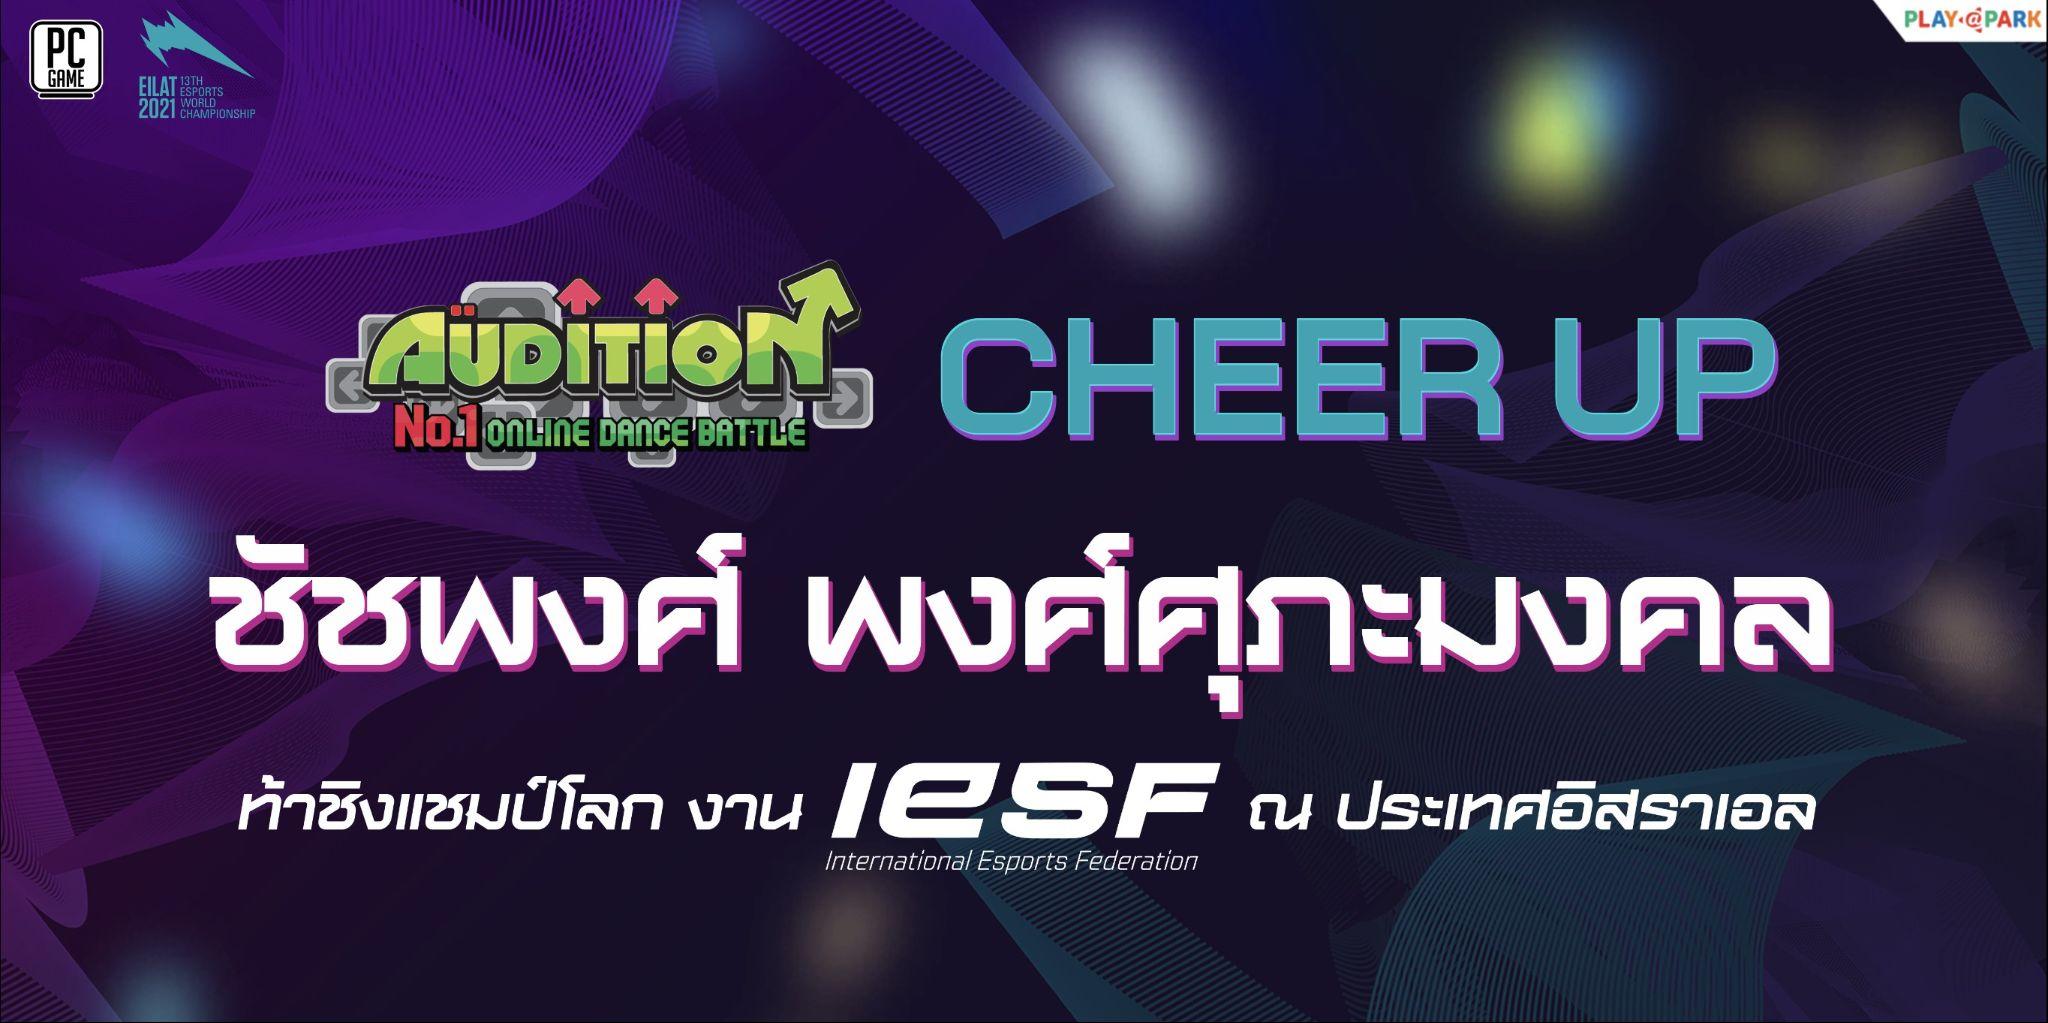 AUDITION ชวนร่วมส่งแรงใจเชียร์  น้องไกด์ ชัชพงศ์ ตัวแทนประเทศไทย คว้าชัยการแข่งขันระดับโลก Esports World Championship